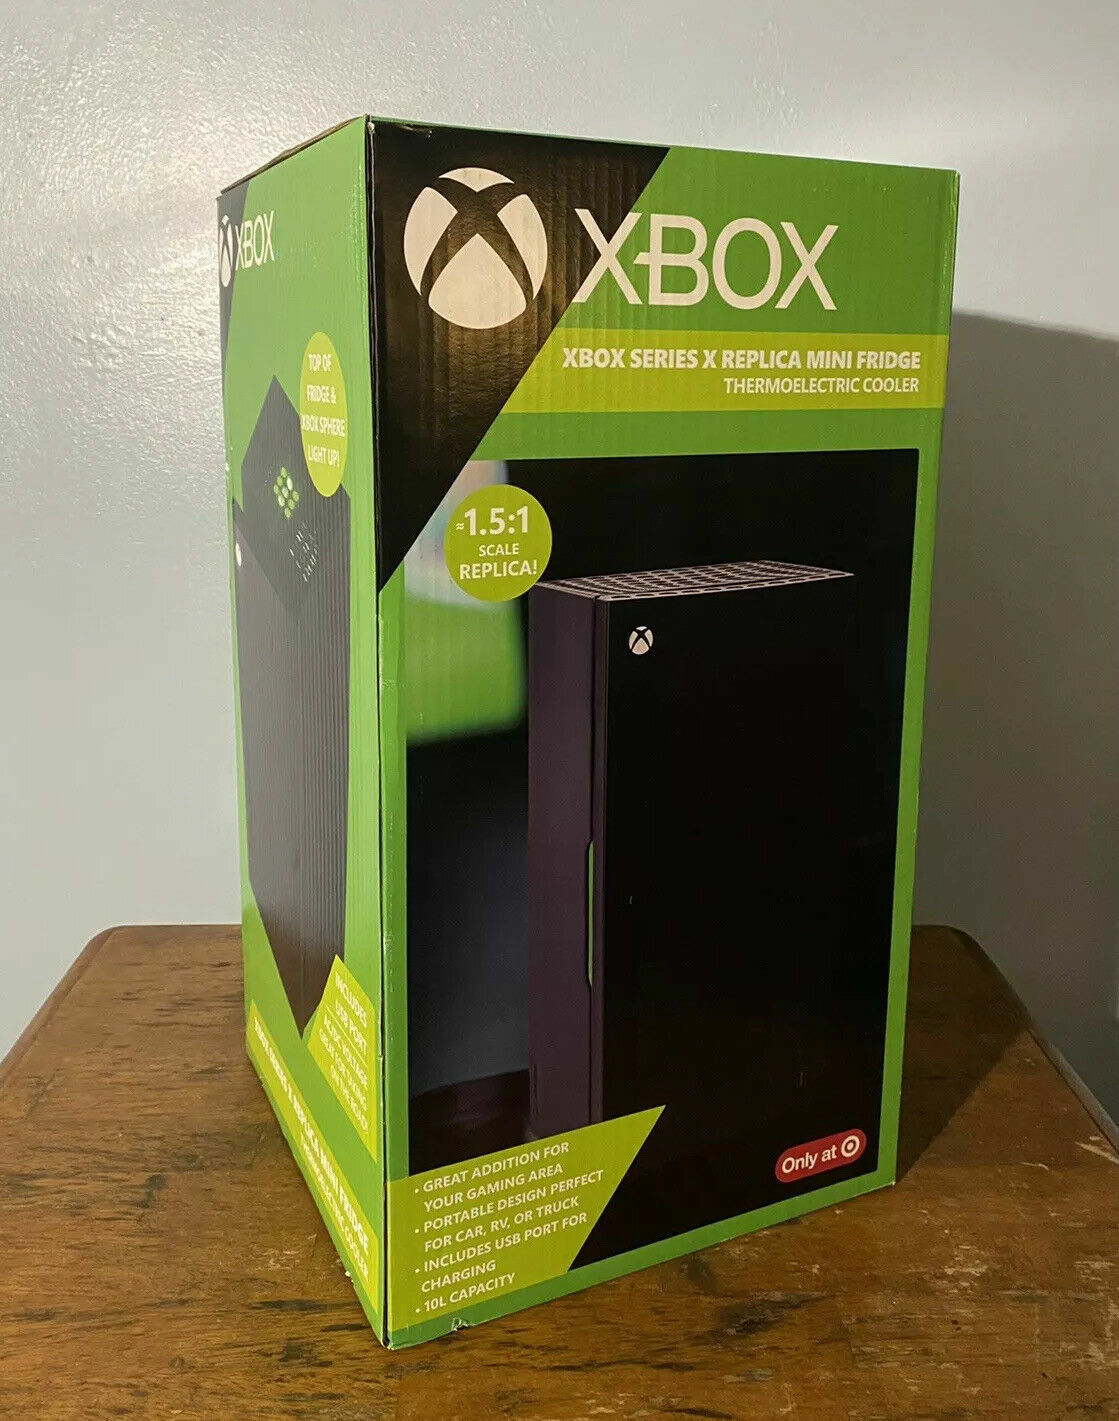 Xbox Series X Mini Fridge: Fans verärgert über misslungenen Vorverkaufsstart